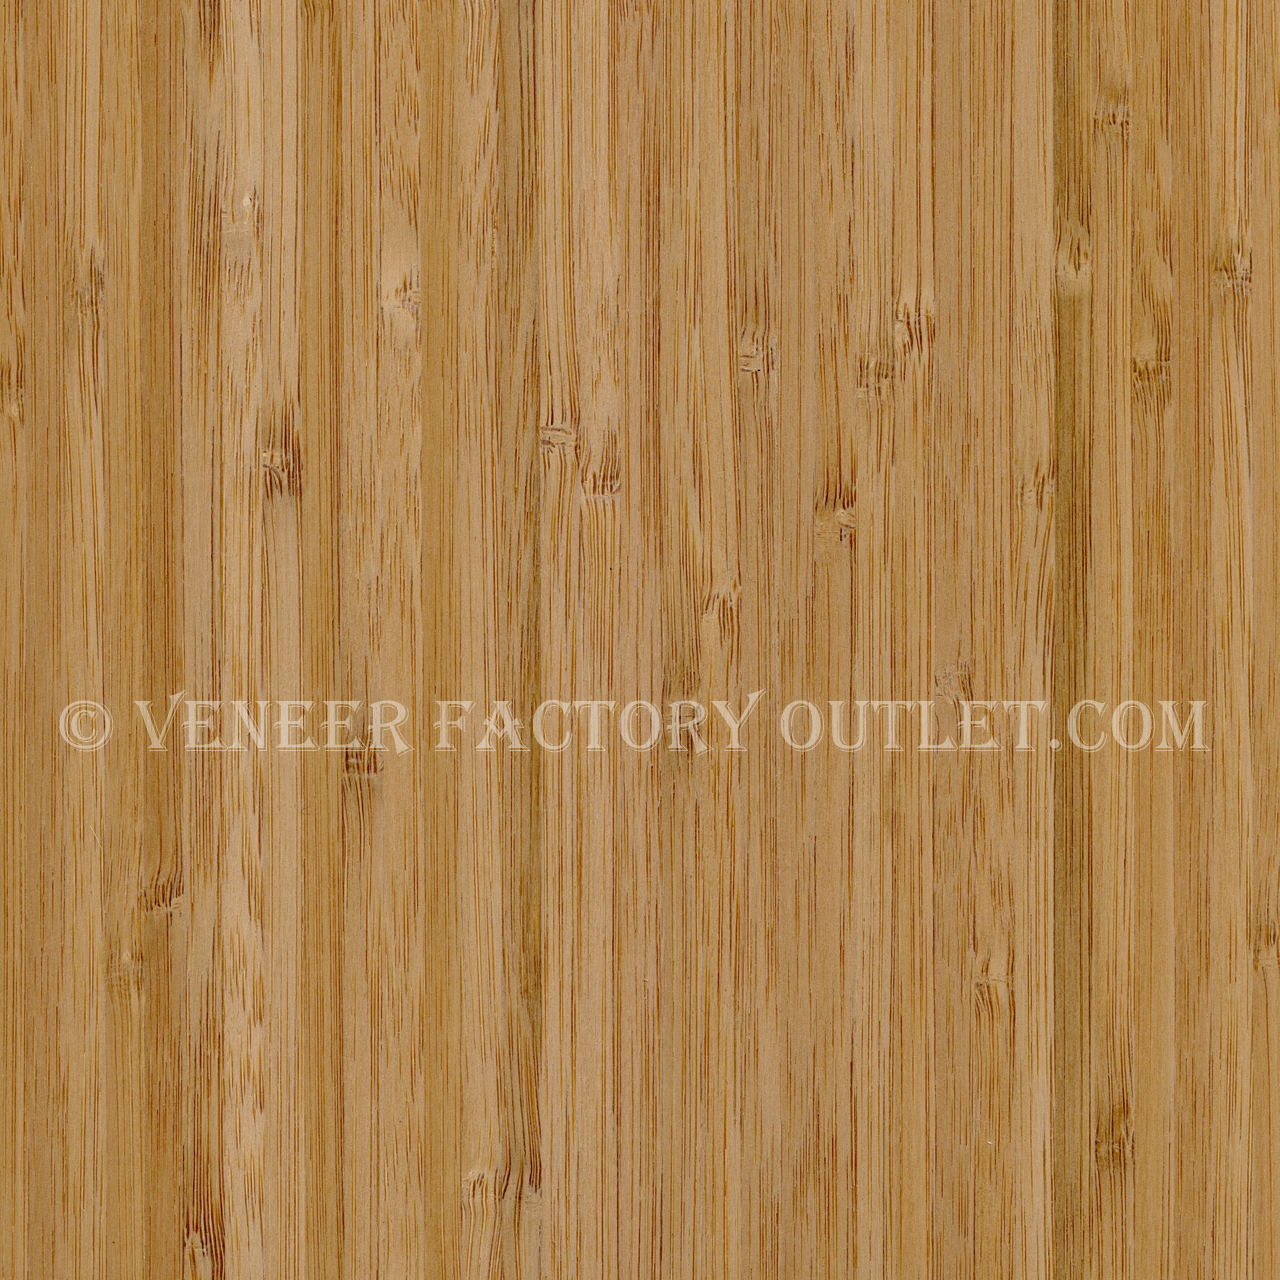 Oak Veneer Sheets Savings At Oak Veneer Factory Outlet.com